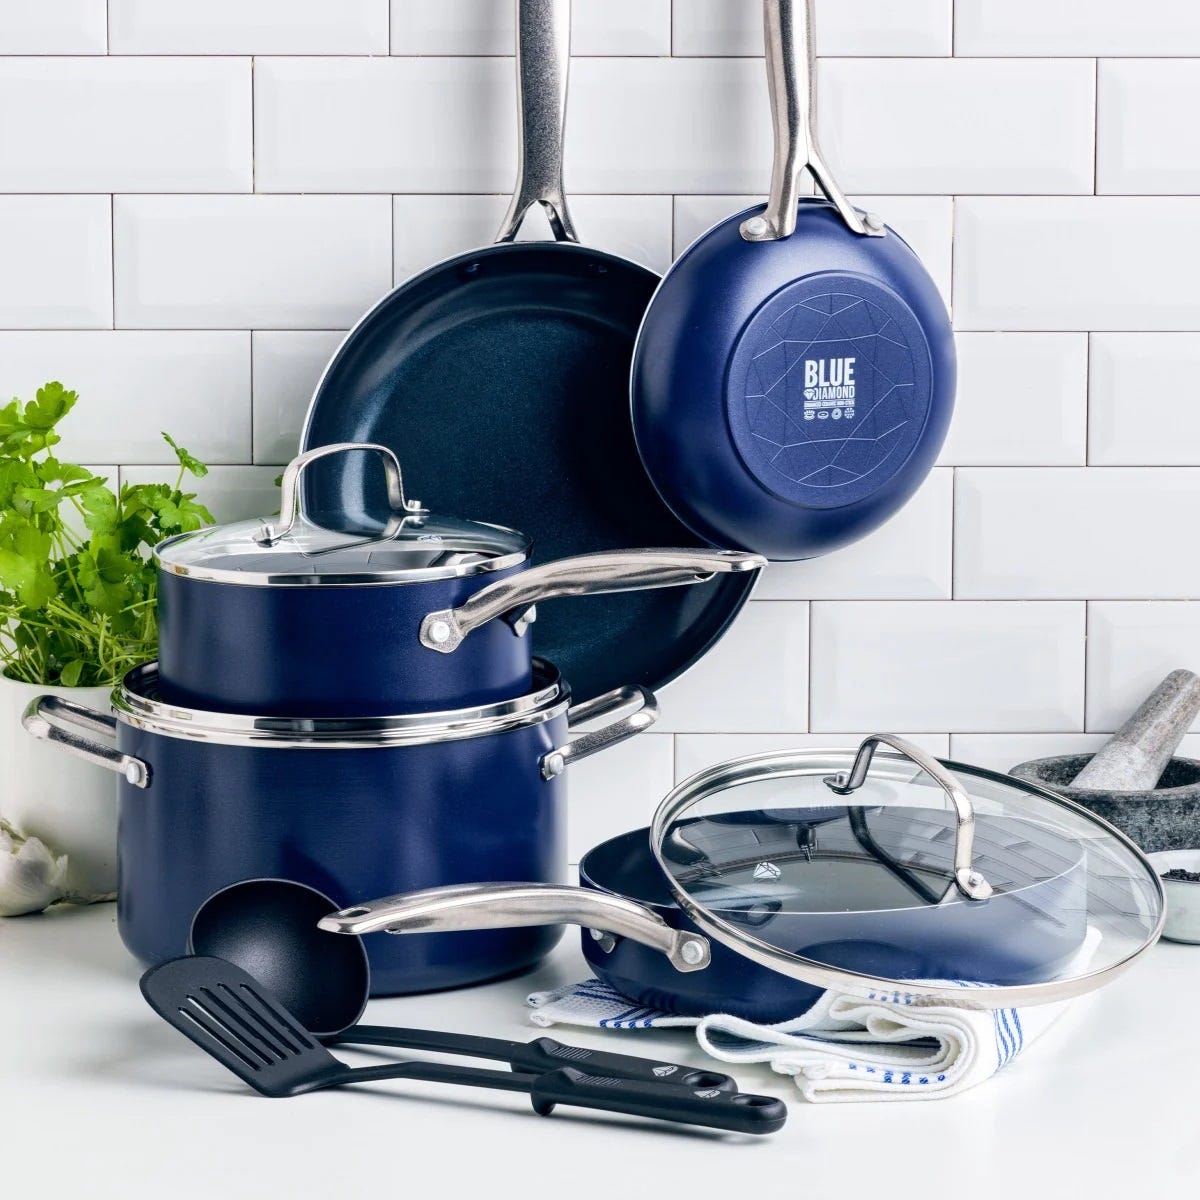 A set of blue cookware including pots, pans, lids, and kitchen utensils.